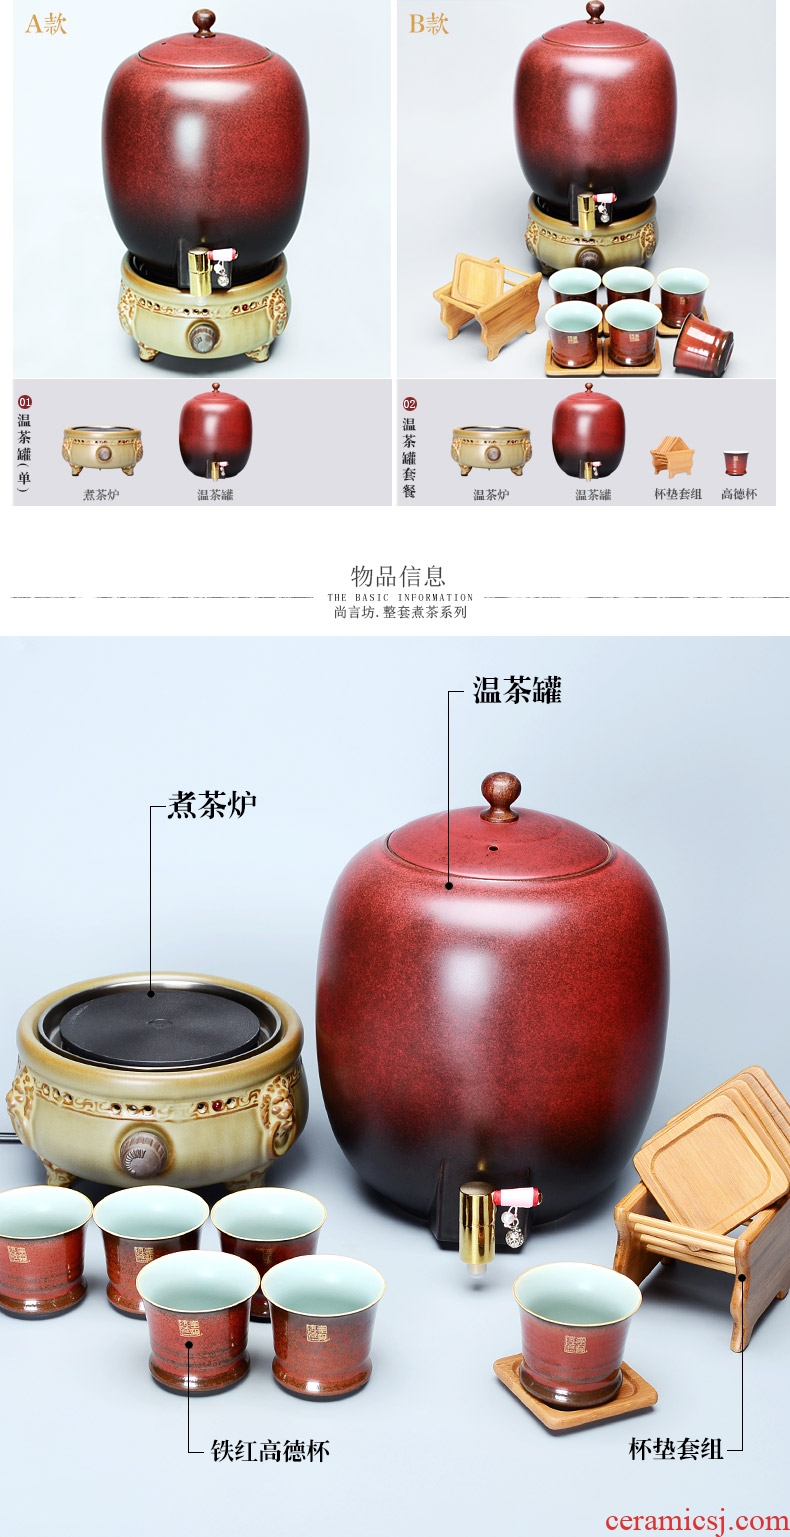 It still fang wen receives warm tea ware ceramic boiled tea, tea stove temperature steam bubble kung fu tea set